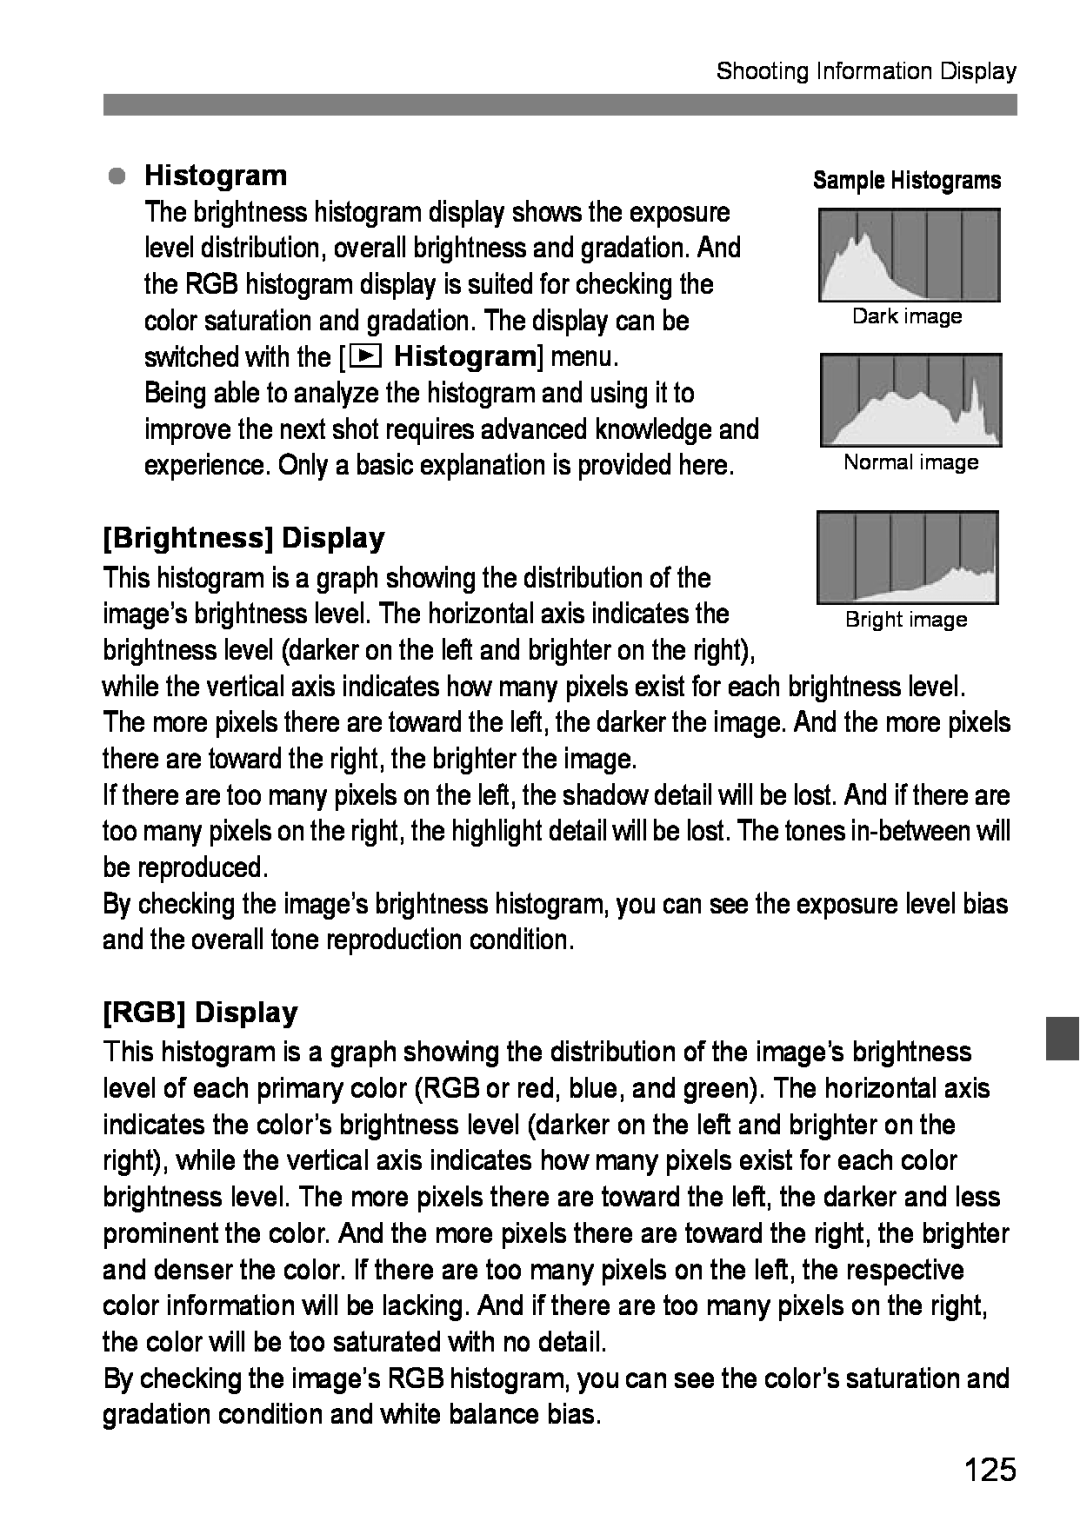 Canon EOS DIGITAL REBEL XTI instruction manual Histogram, Brightness Display, RGB Display 